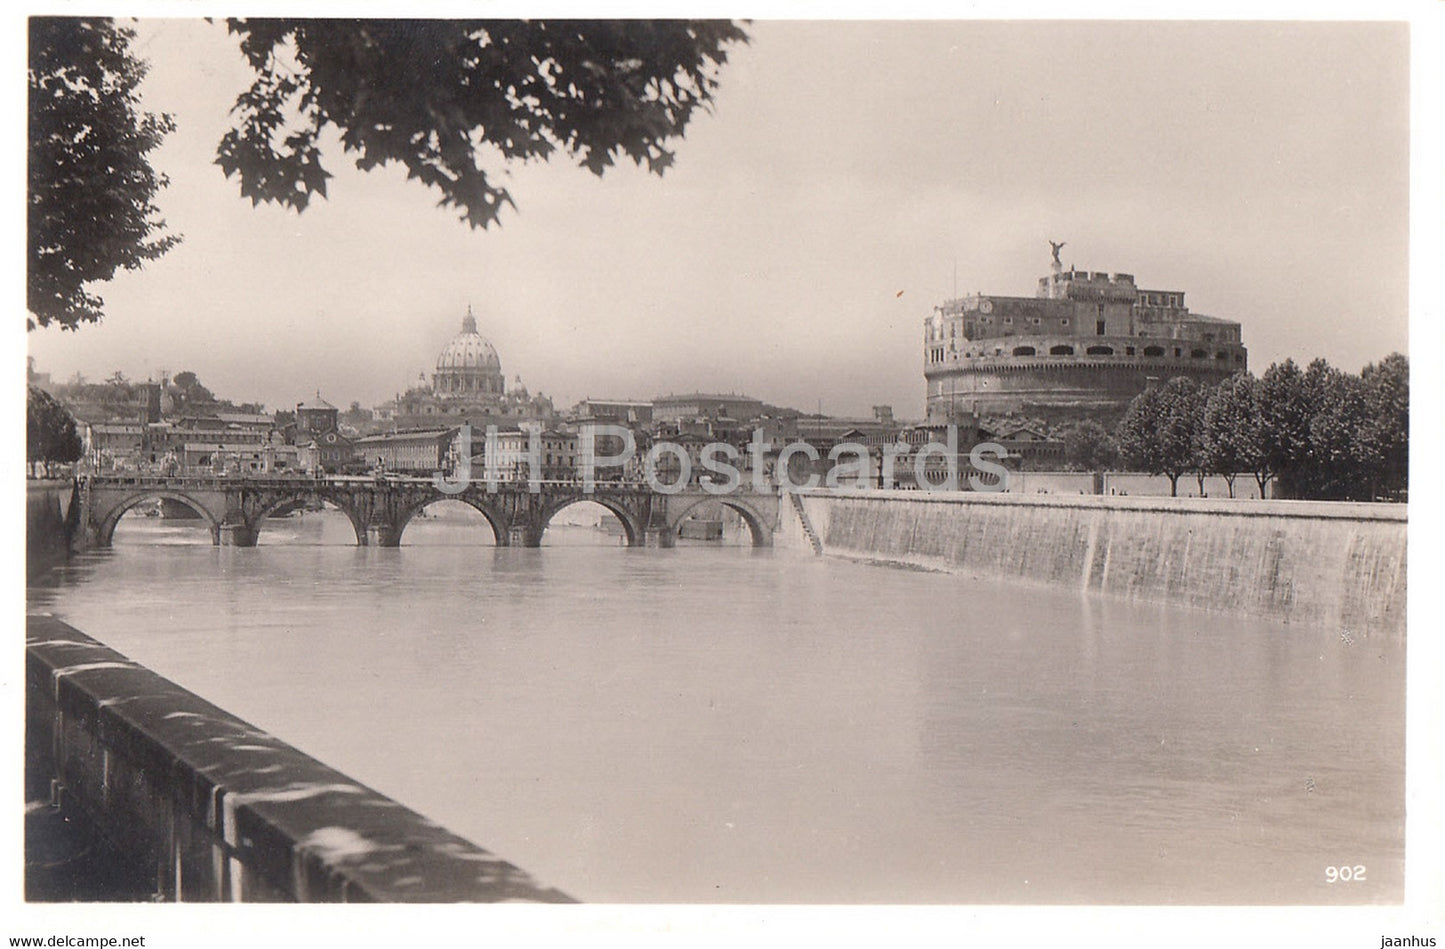 Roma - Rome - Castel Sant Angelo e S Pietro veduti al tramonto - 902 - old postcard - Italy - unused - JH Postcards